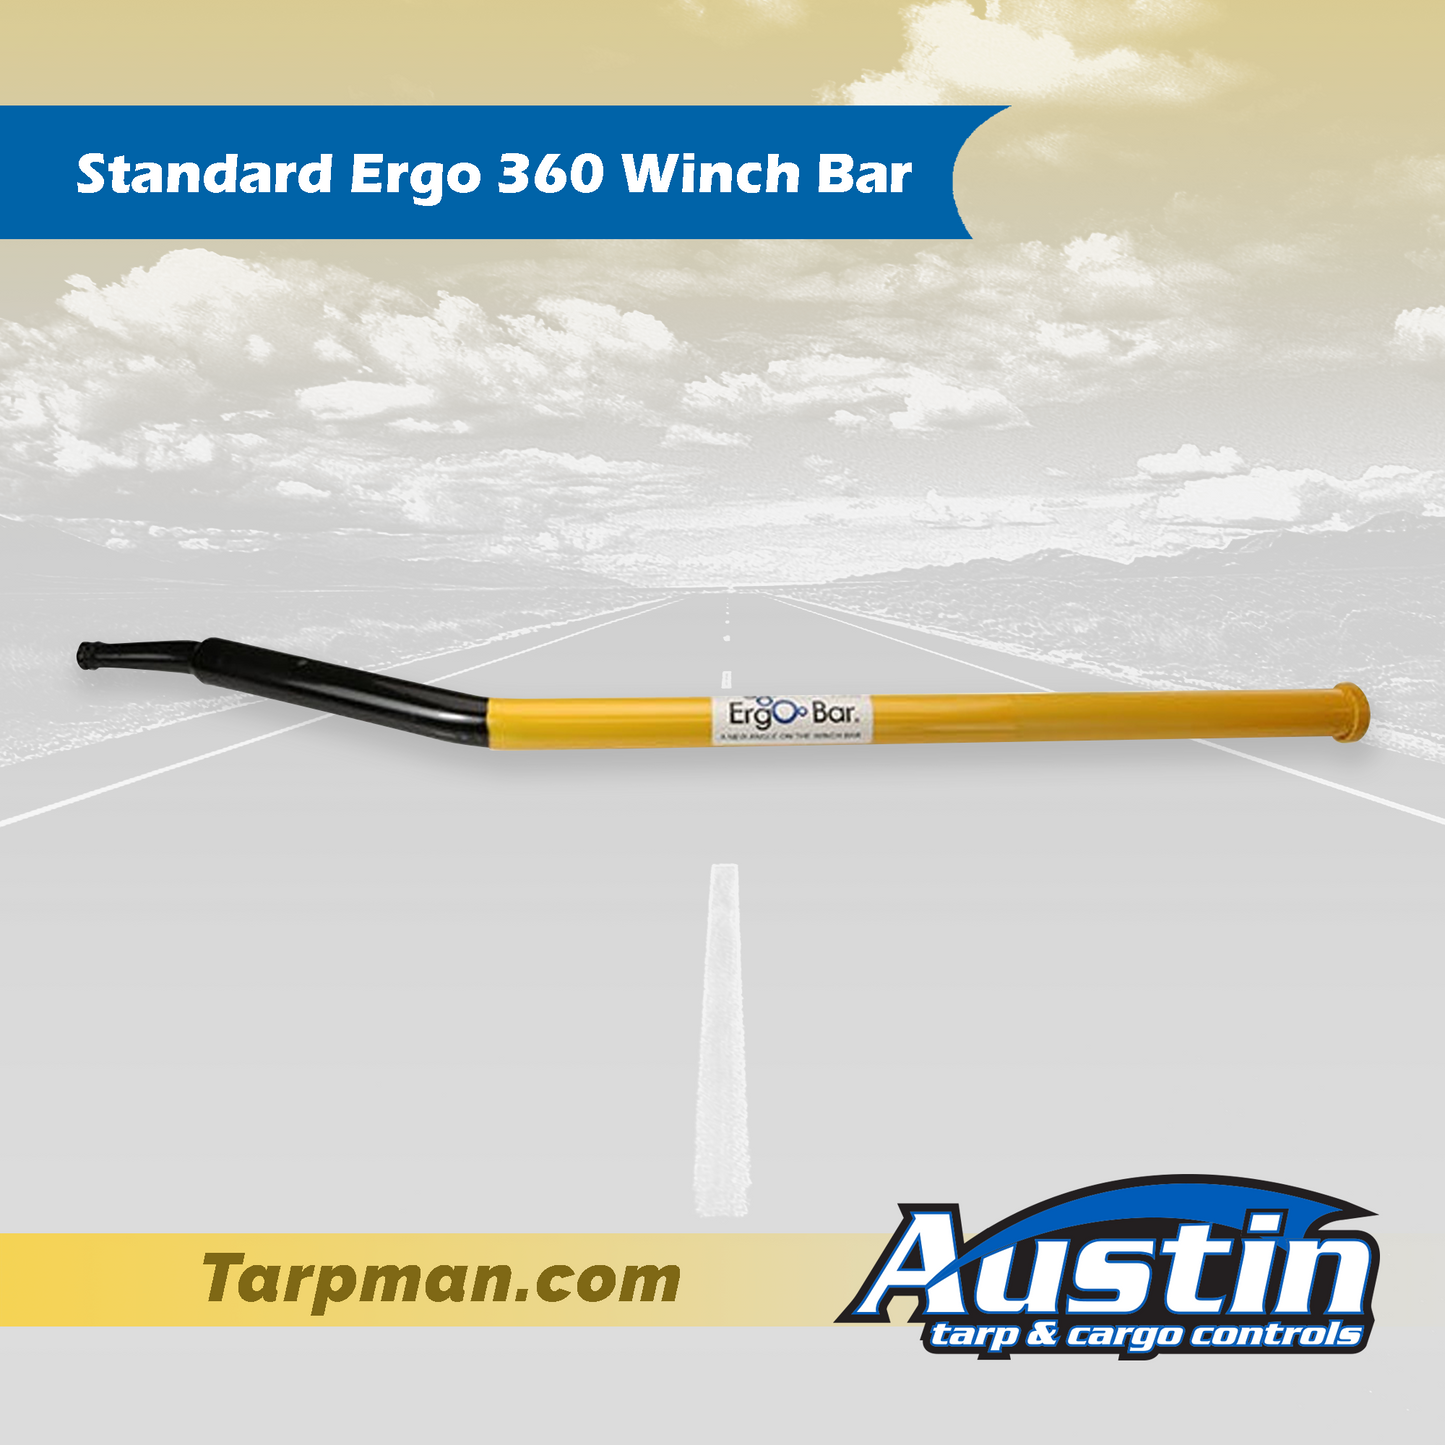 Standard Ergo 360 Winch Bar